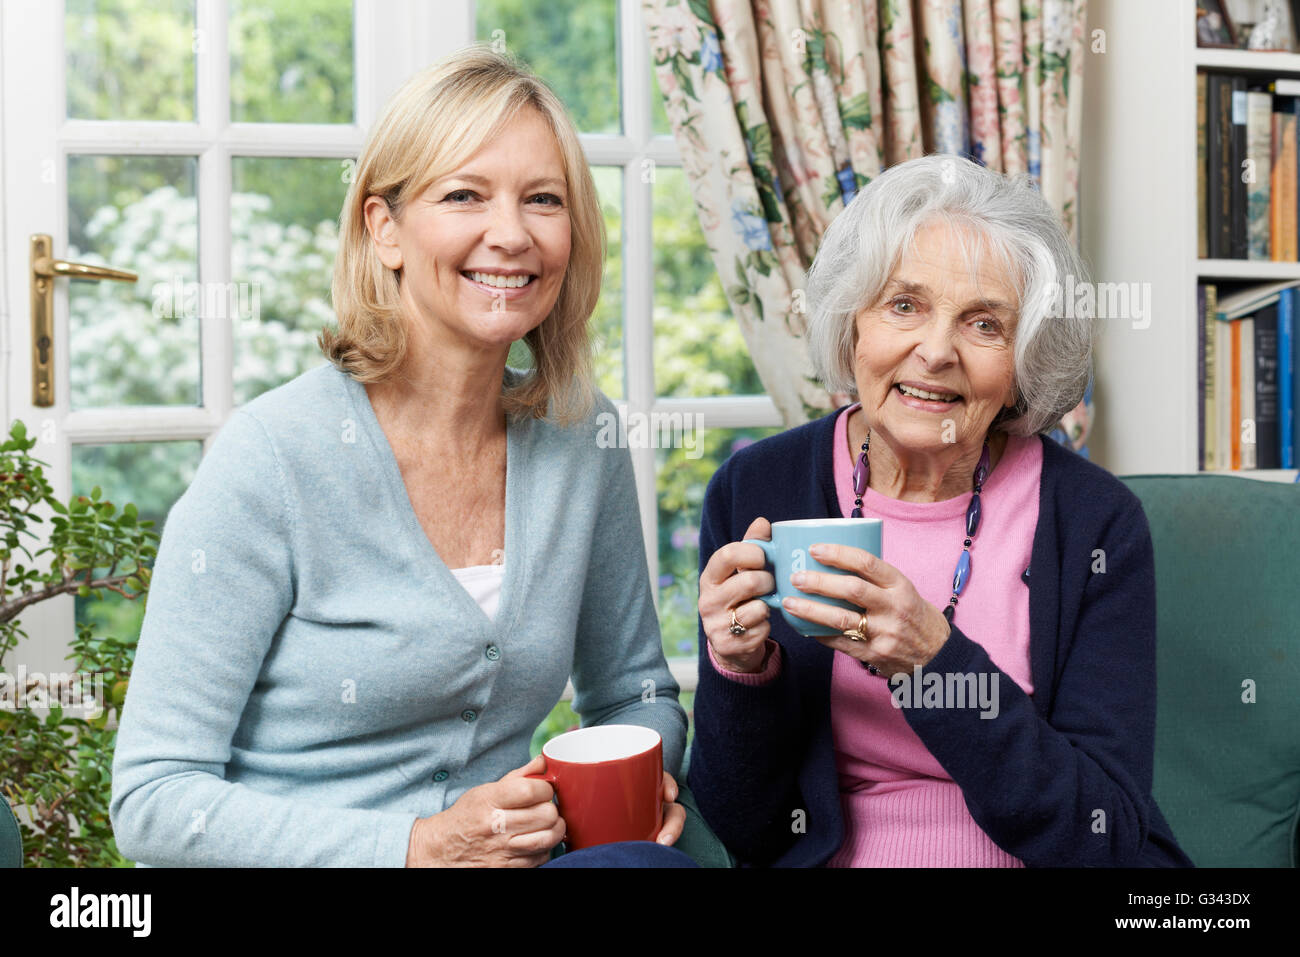 Woman Taking Time To Visit Senior Female Neighbor And Talk Stock Photo